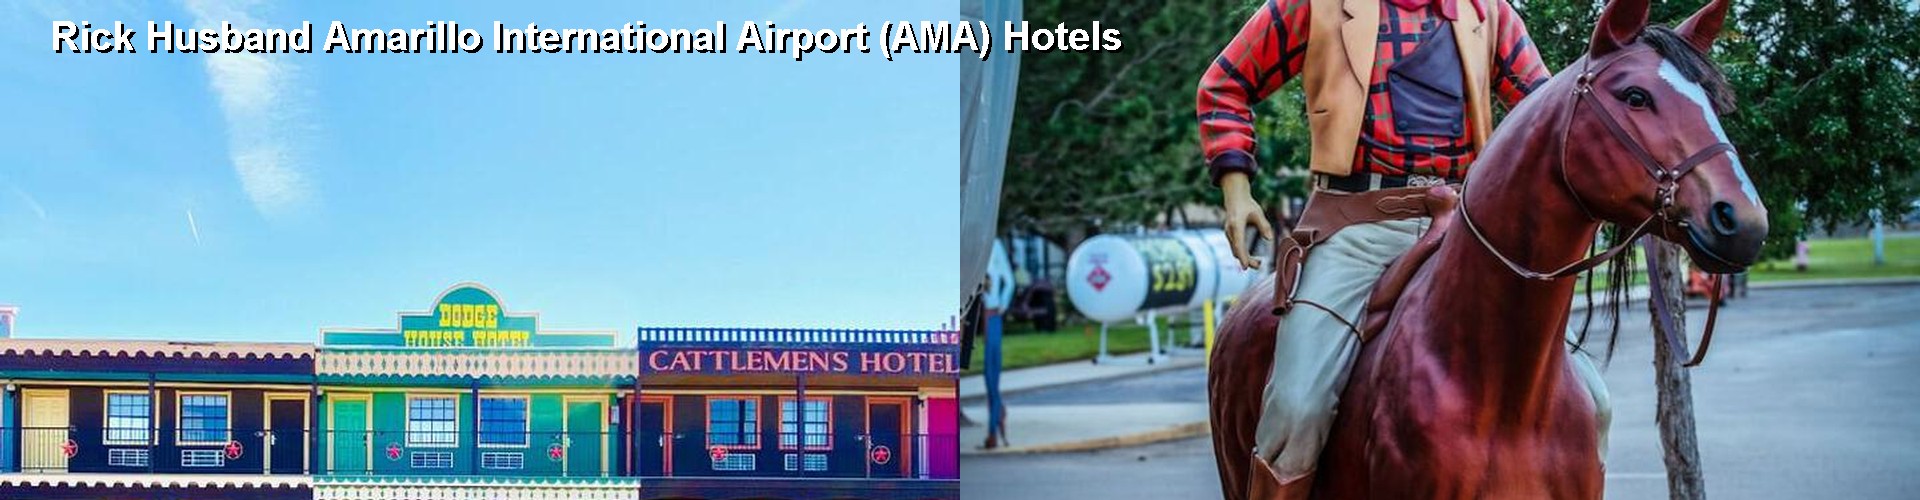 5 Best Hotels near Rick Husband Amarillo International Airport (AMA)